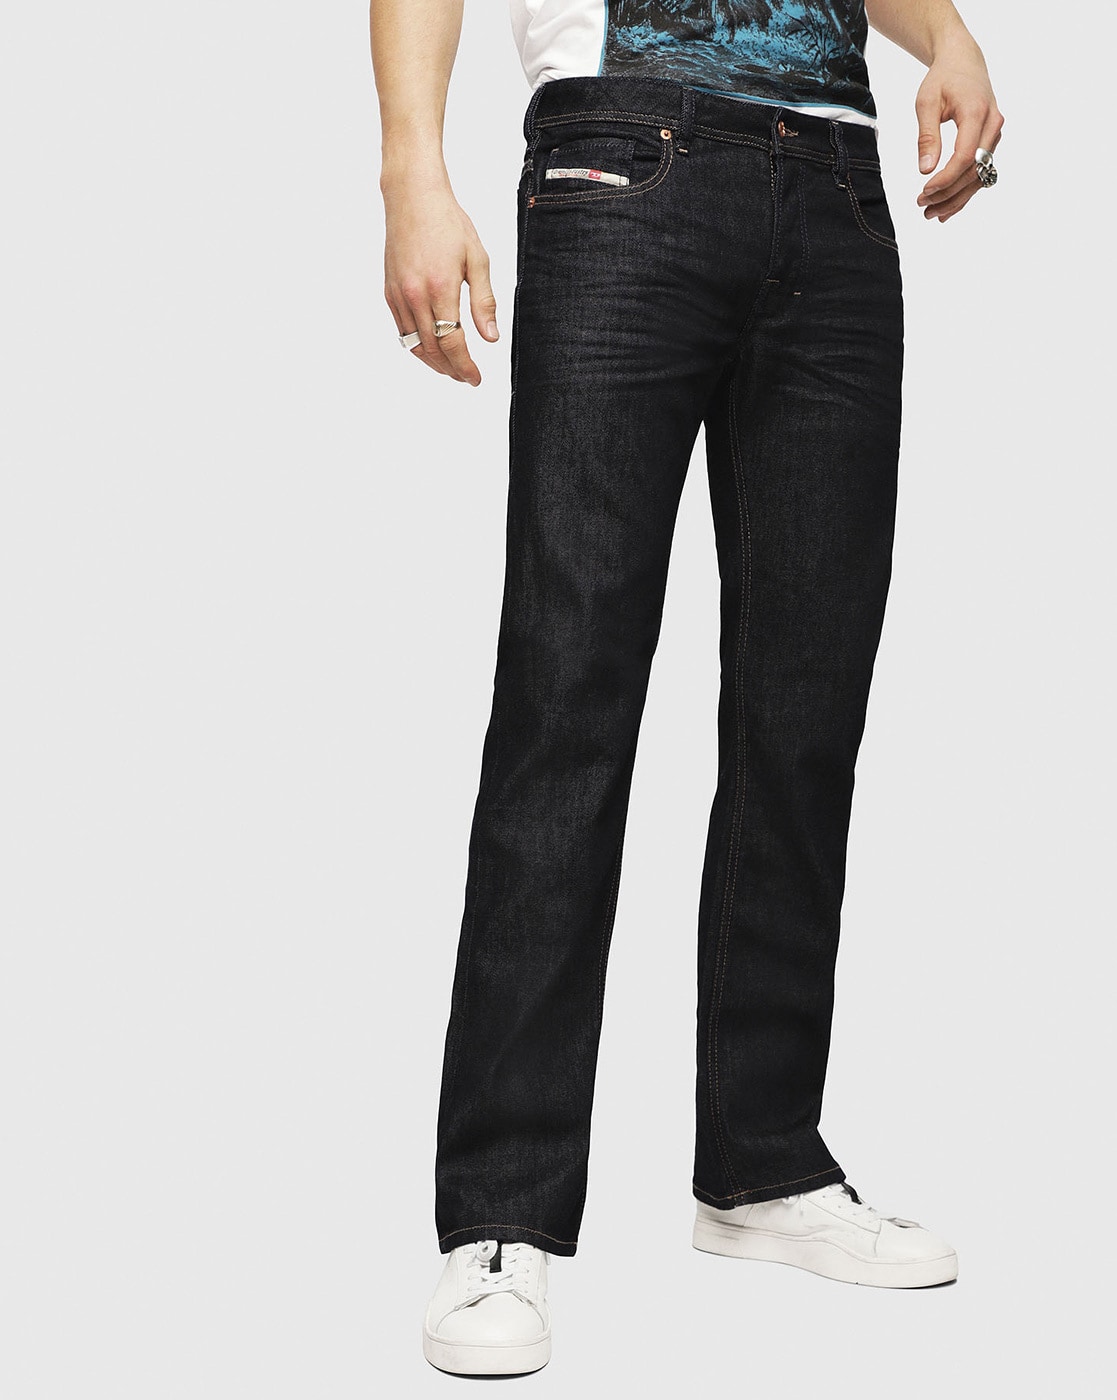 Buy Blue Jeans for Men by DIESEL Online 